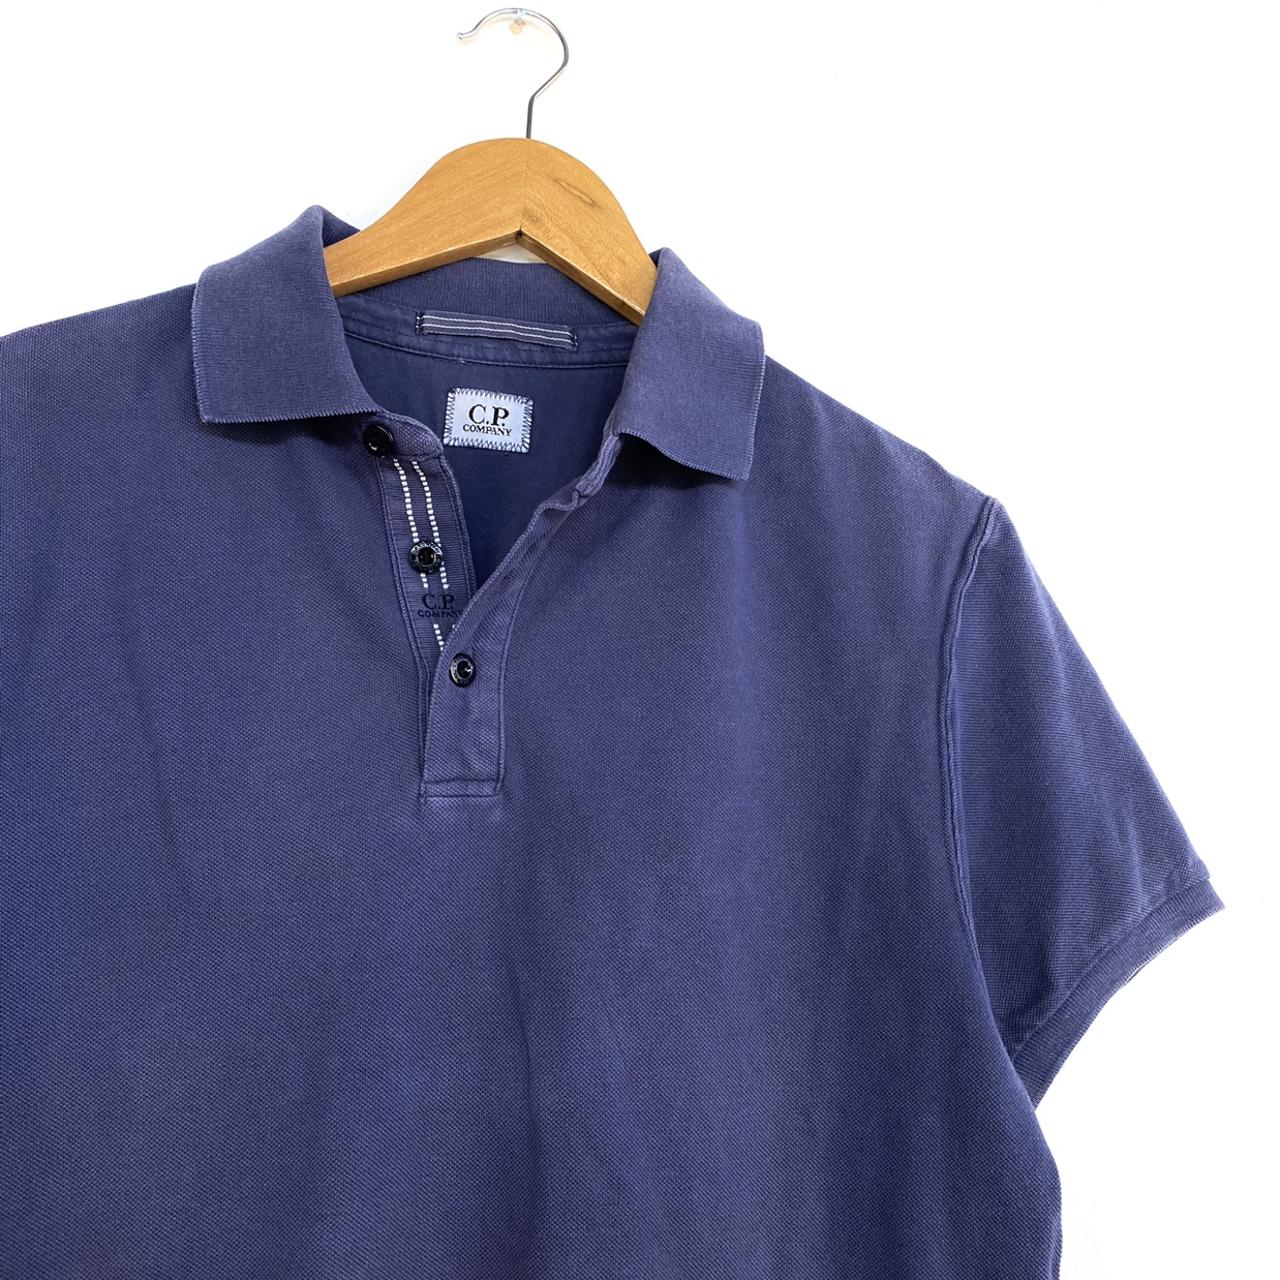 Vintage CP Company polo shirt - size medium - navy... - Depop